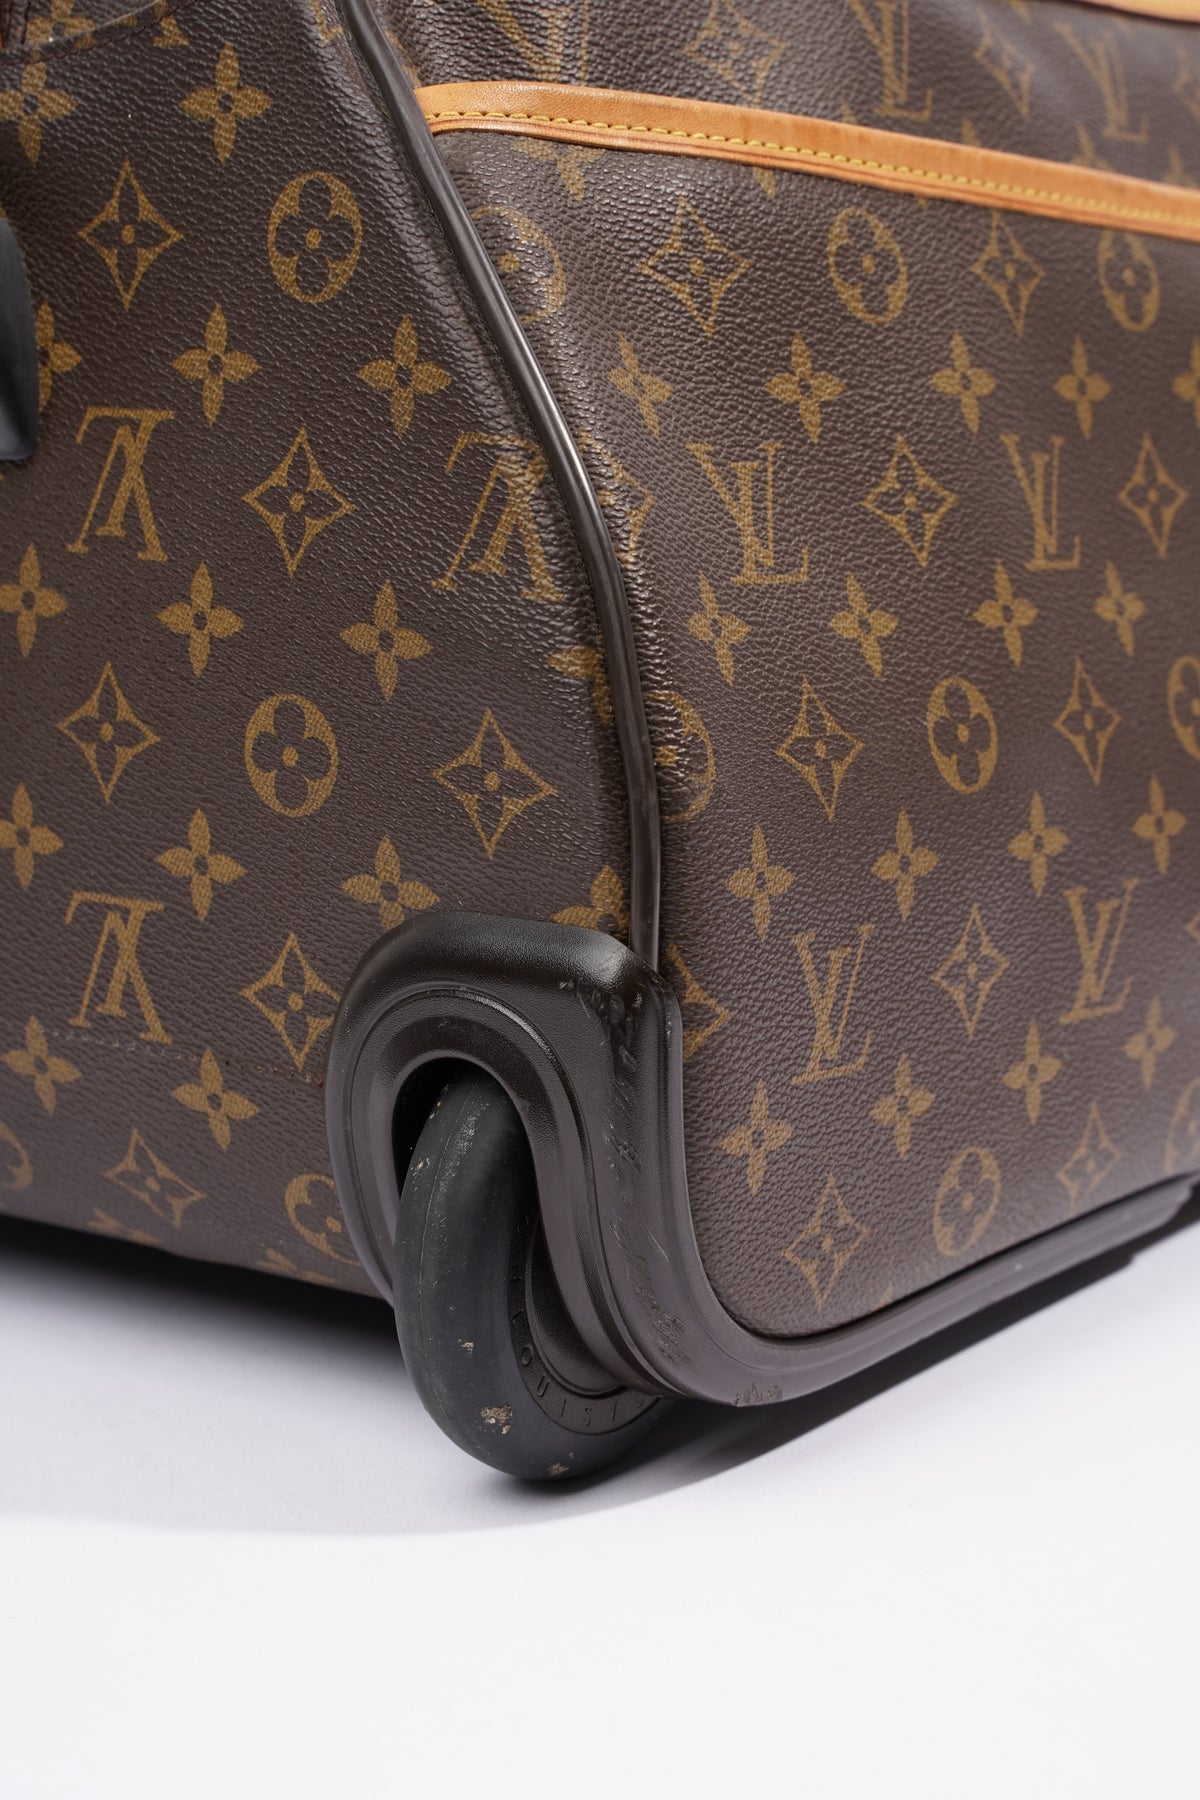 LOUIS VUITTON Travel bag Eole 50 cm in Monogram canva…